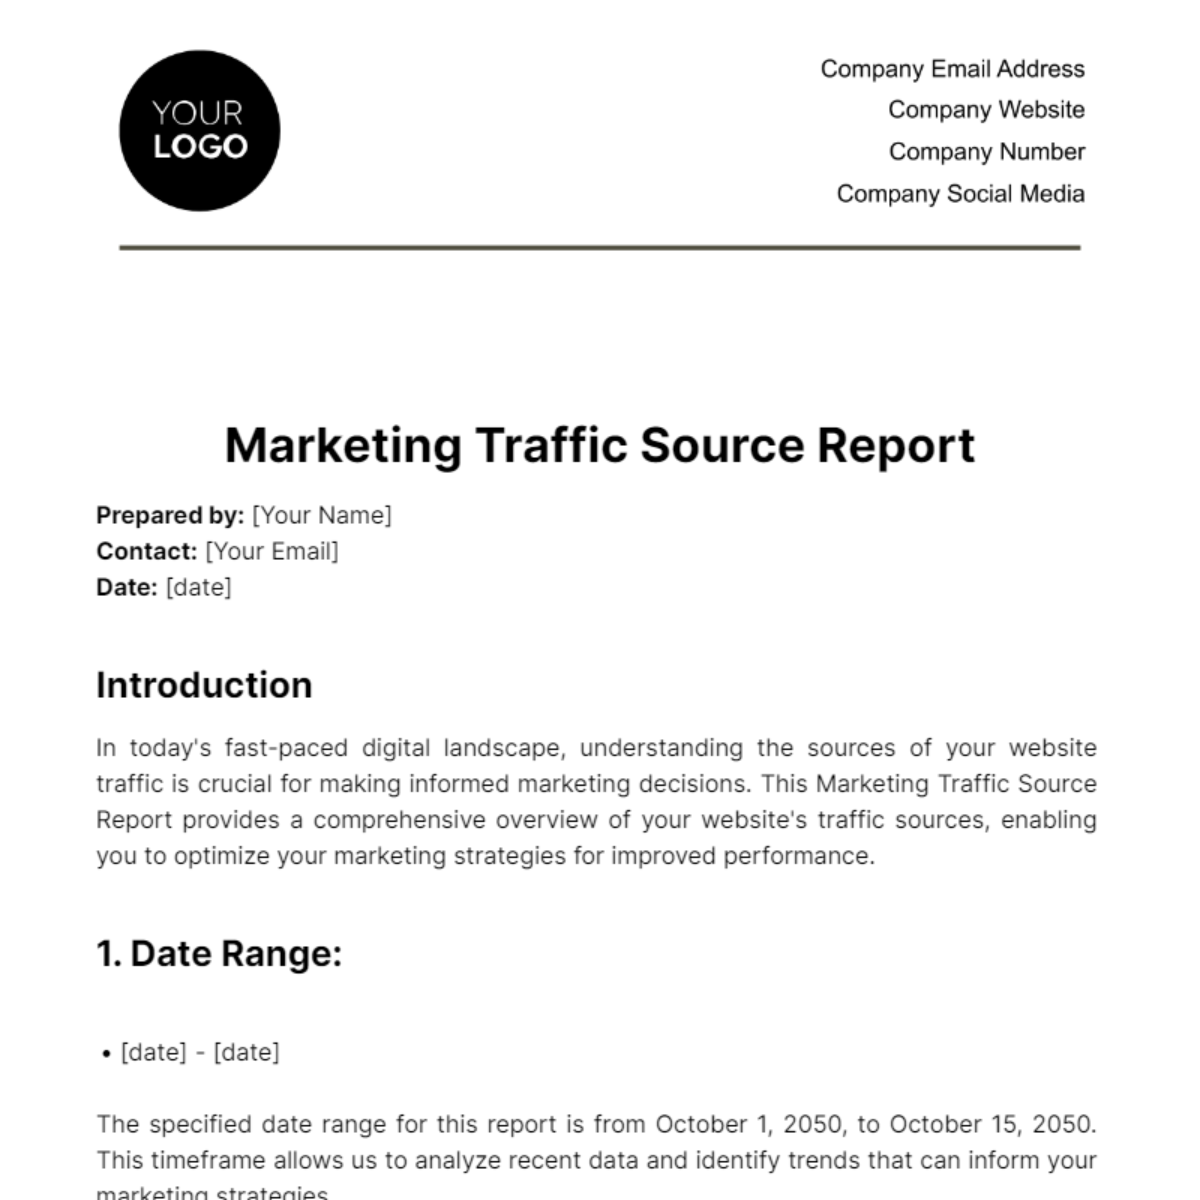 Marketing Traffic Source Report Template